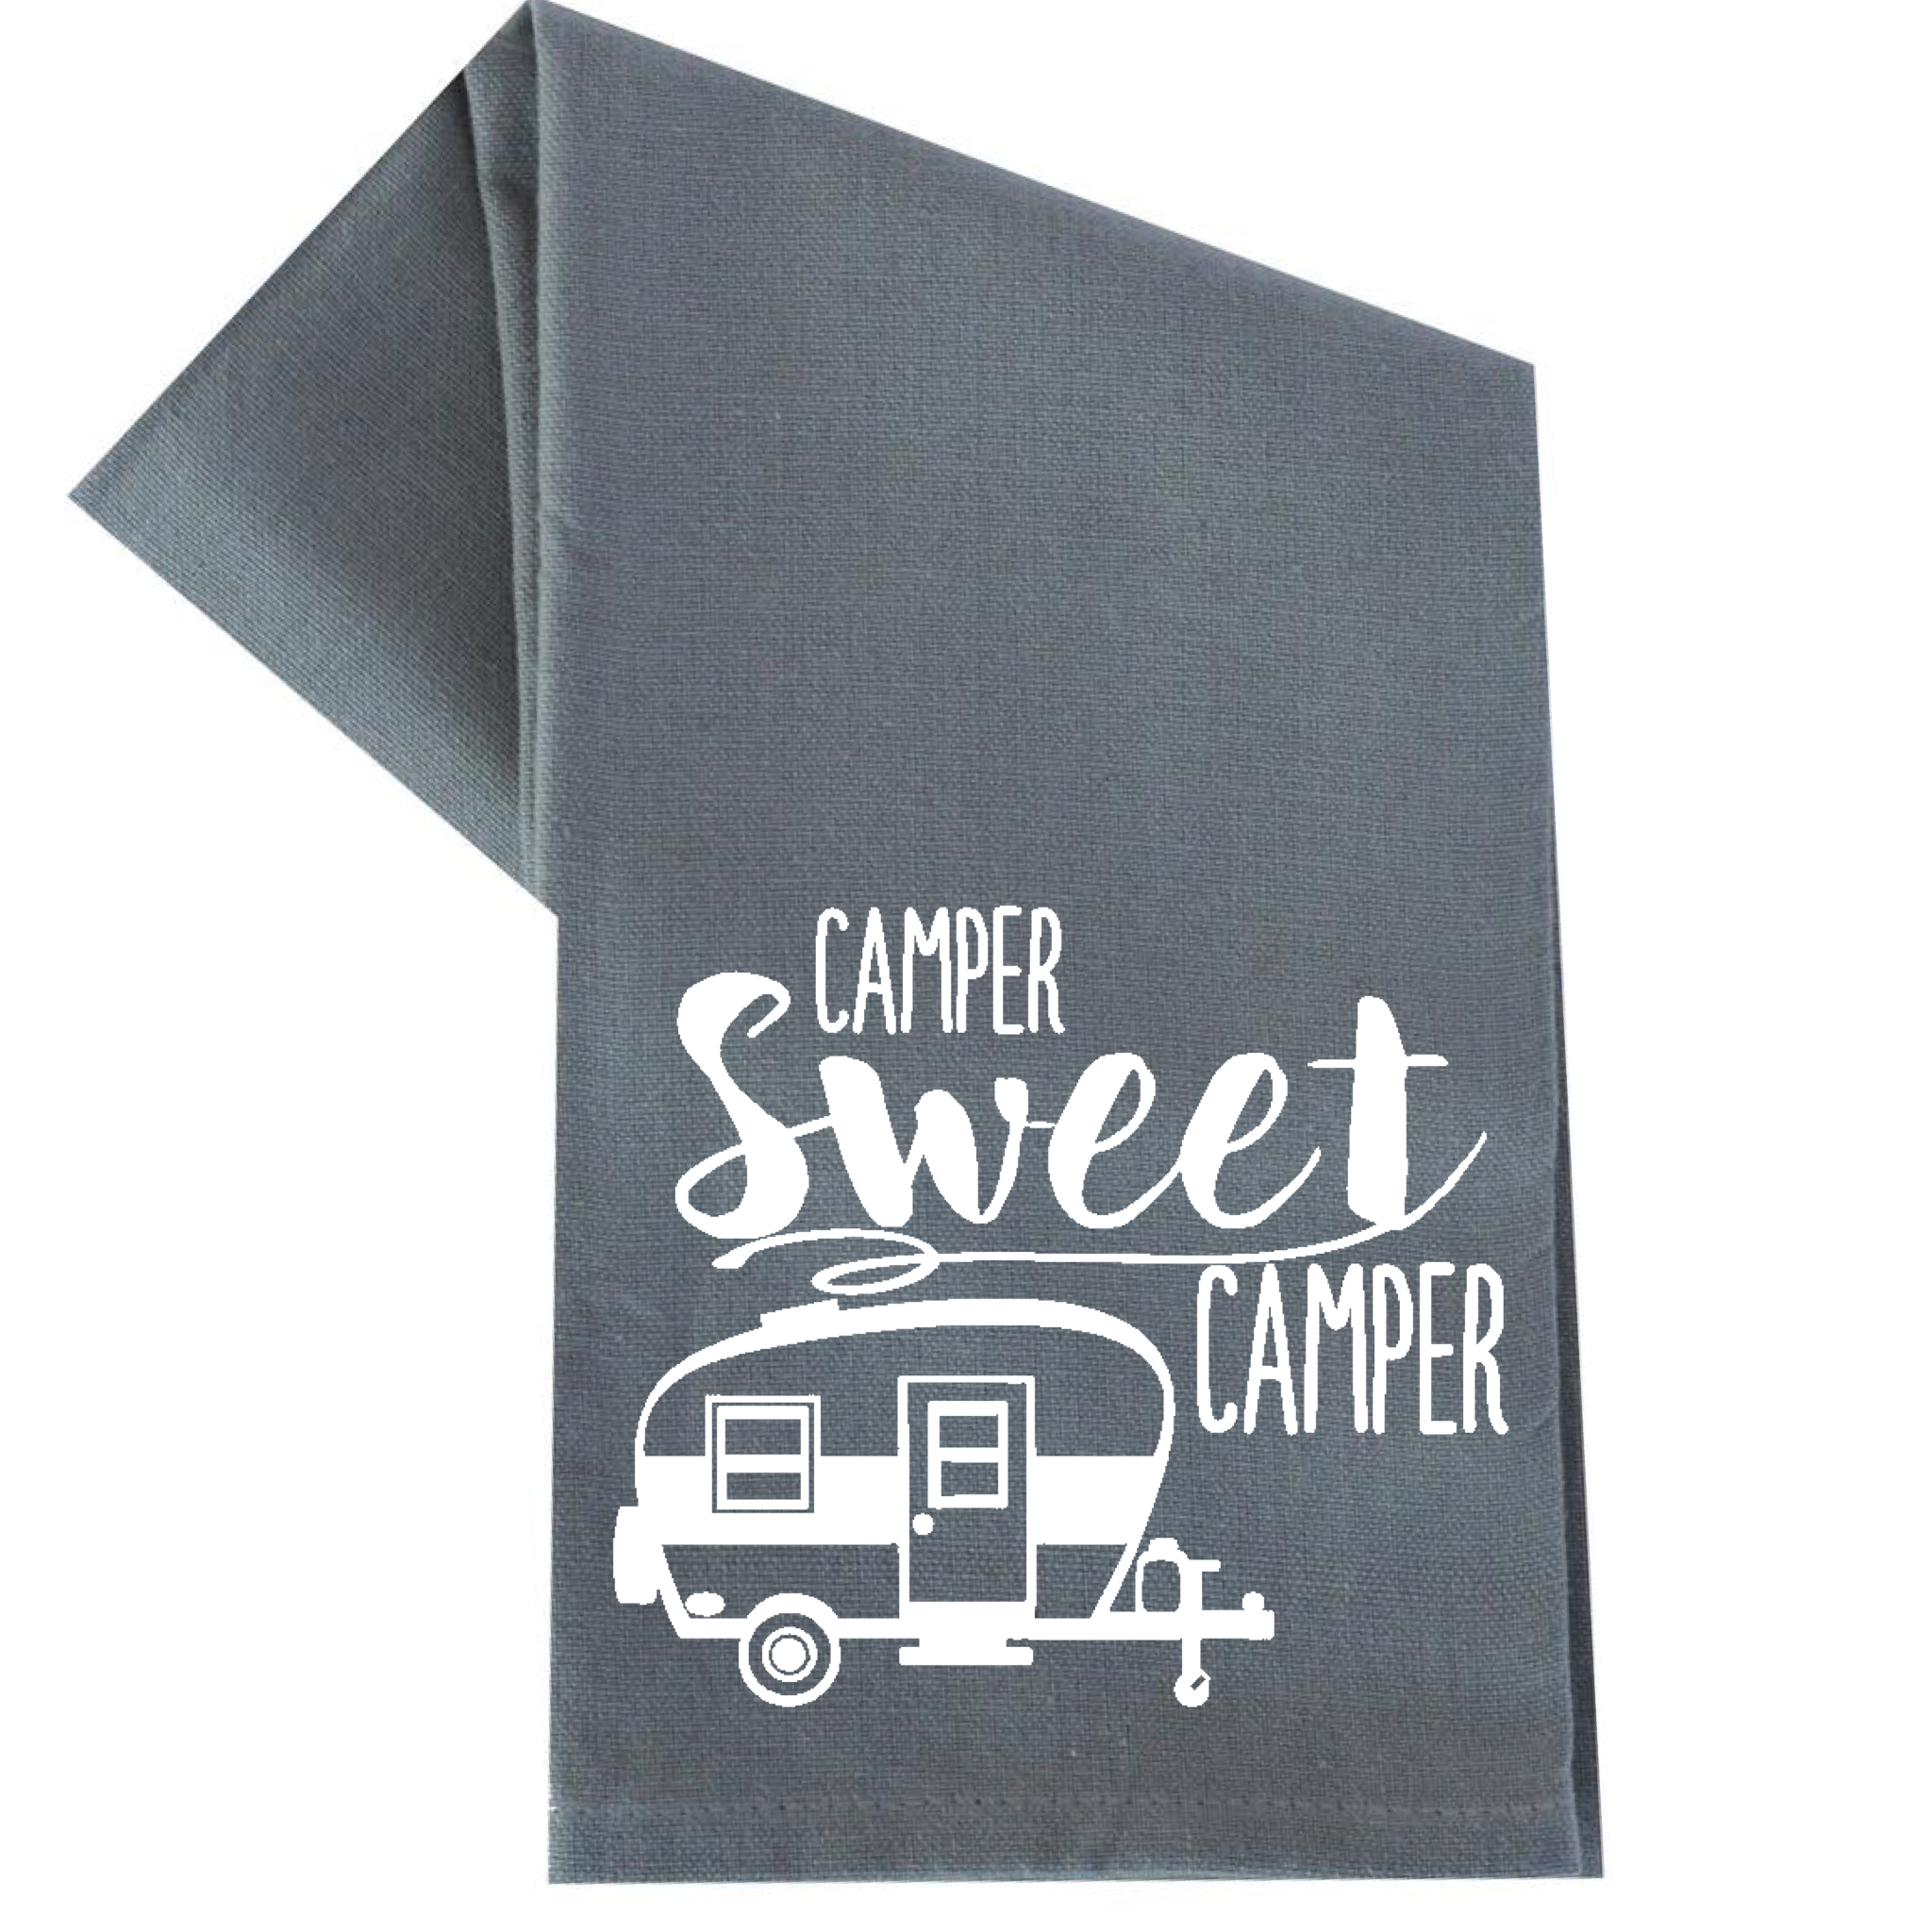 CAMPER SWEET CAMPER TEA TOWEL